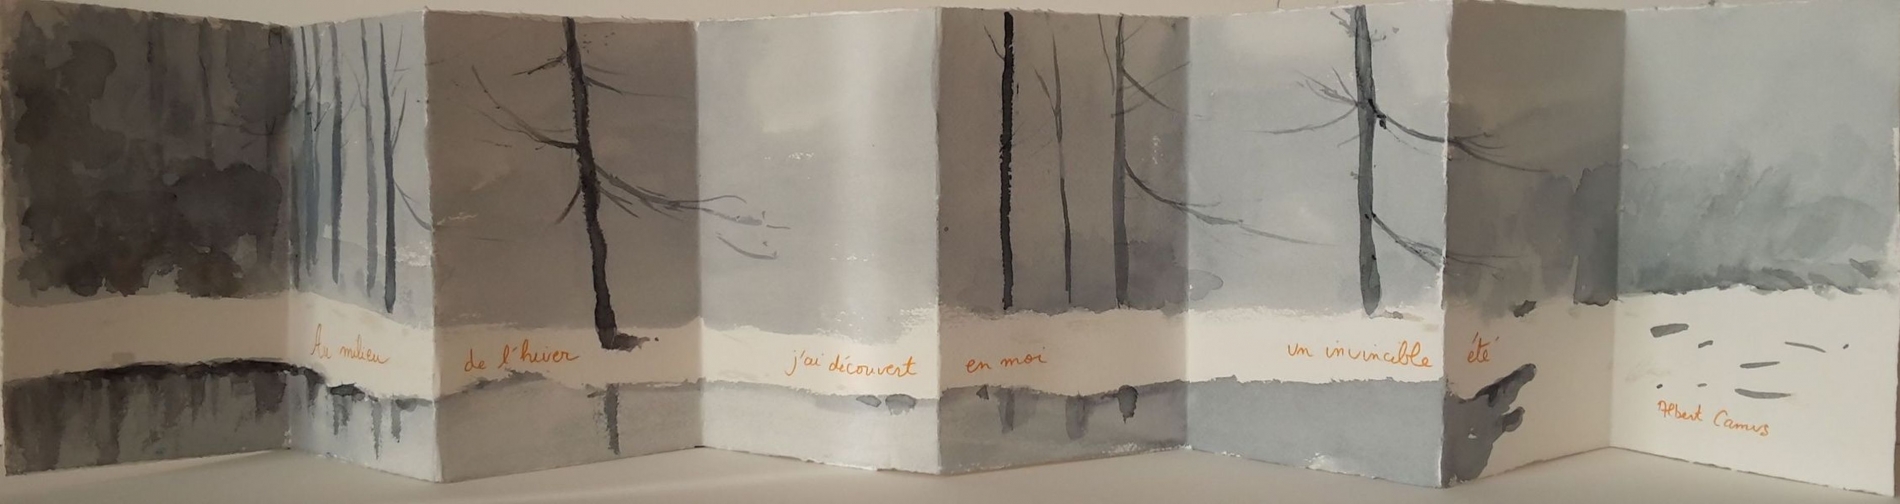 L'hiver et moi I, Albert Camus, aquarelle